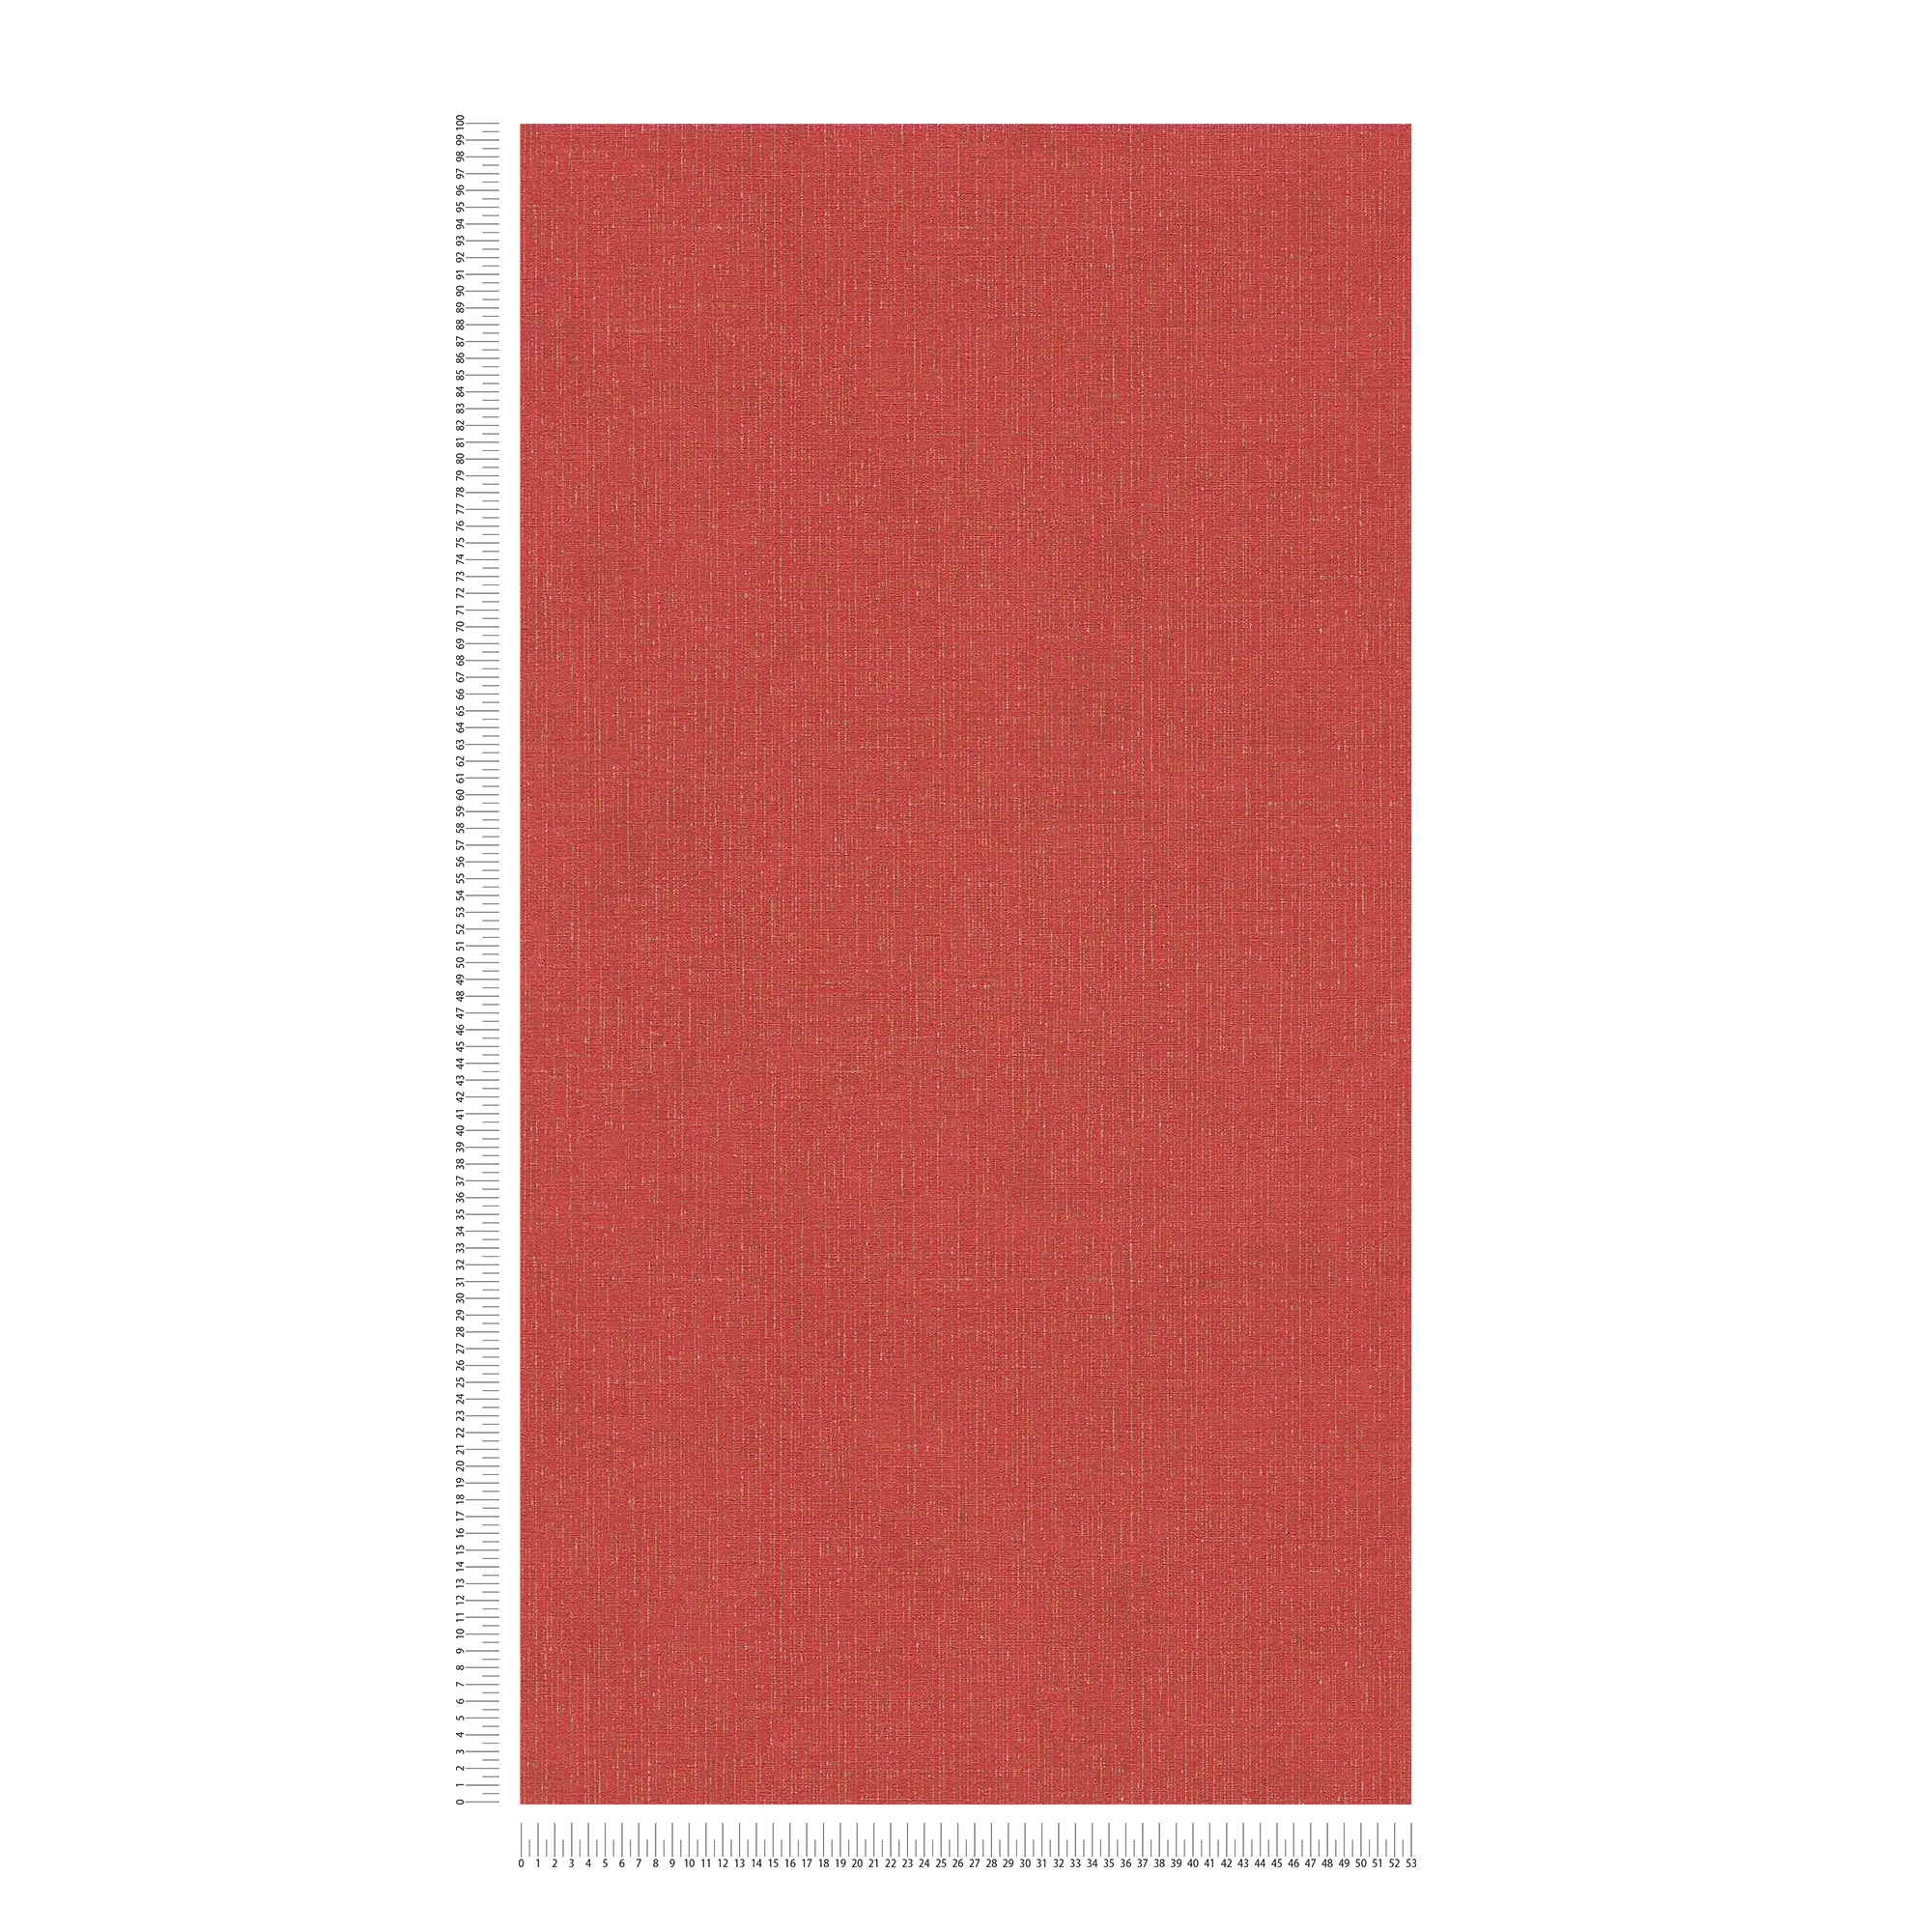             Rote Tapete golden Meliert mit Textiloptik – Metallic, Rot
        